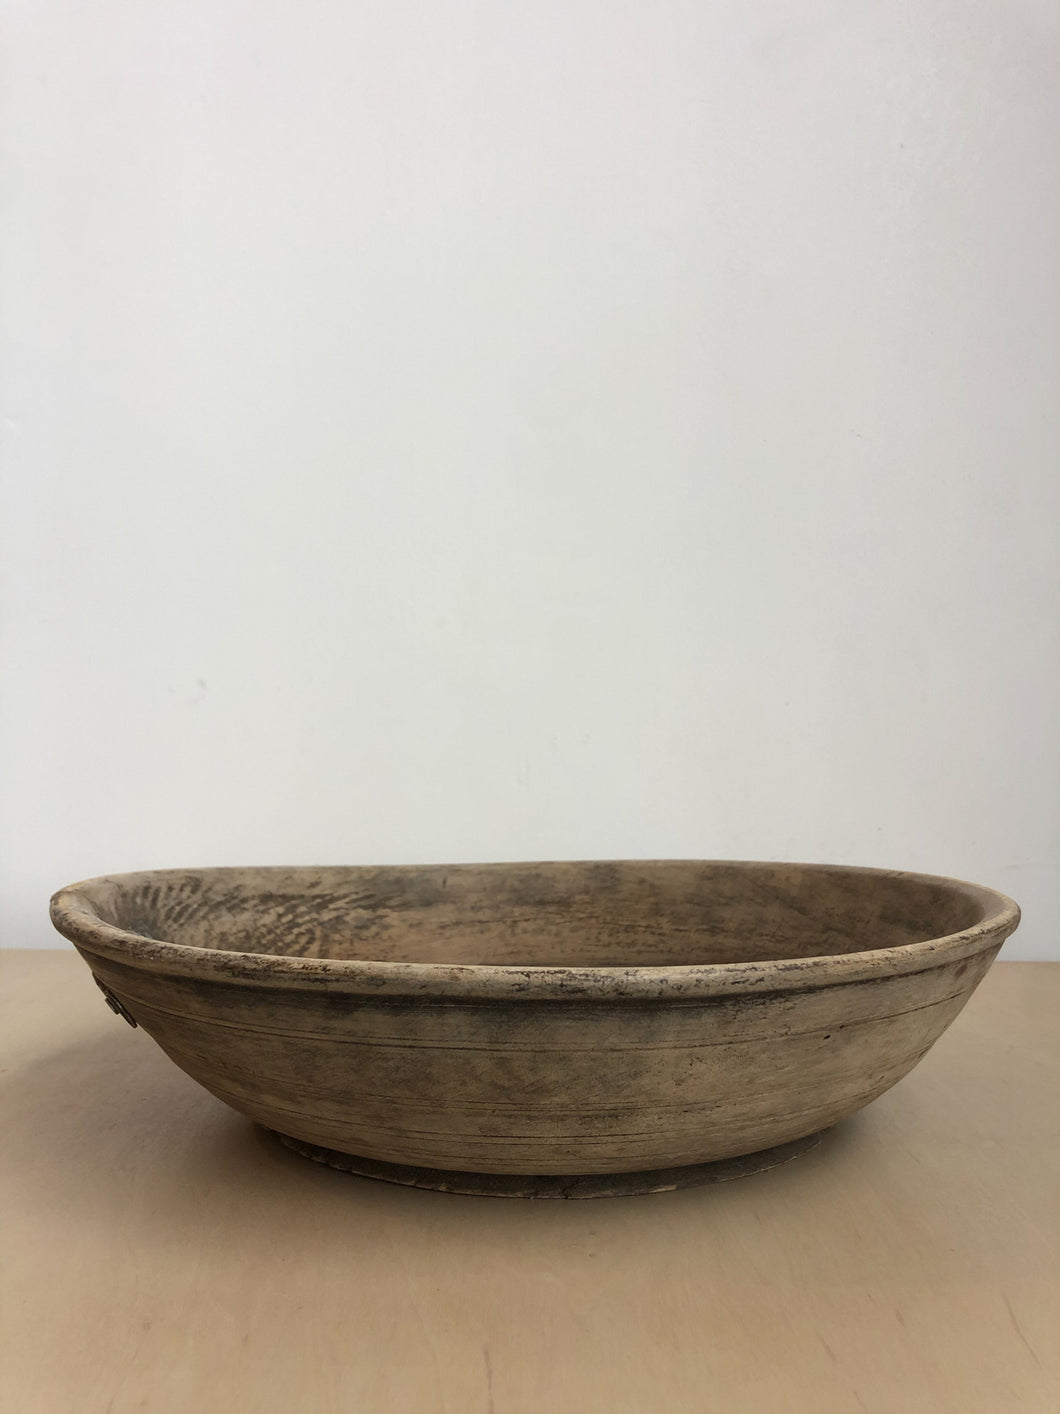 Early Vintage Primitive Wood Bowl